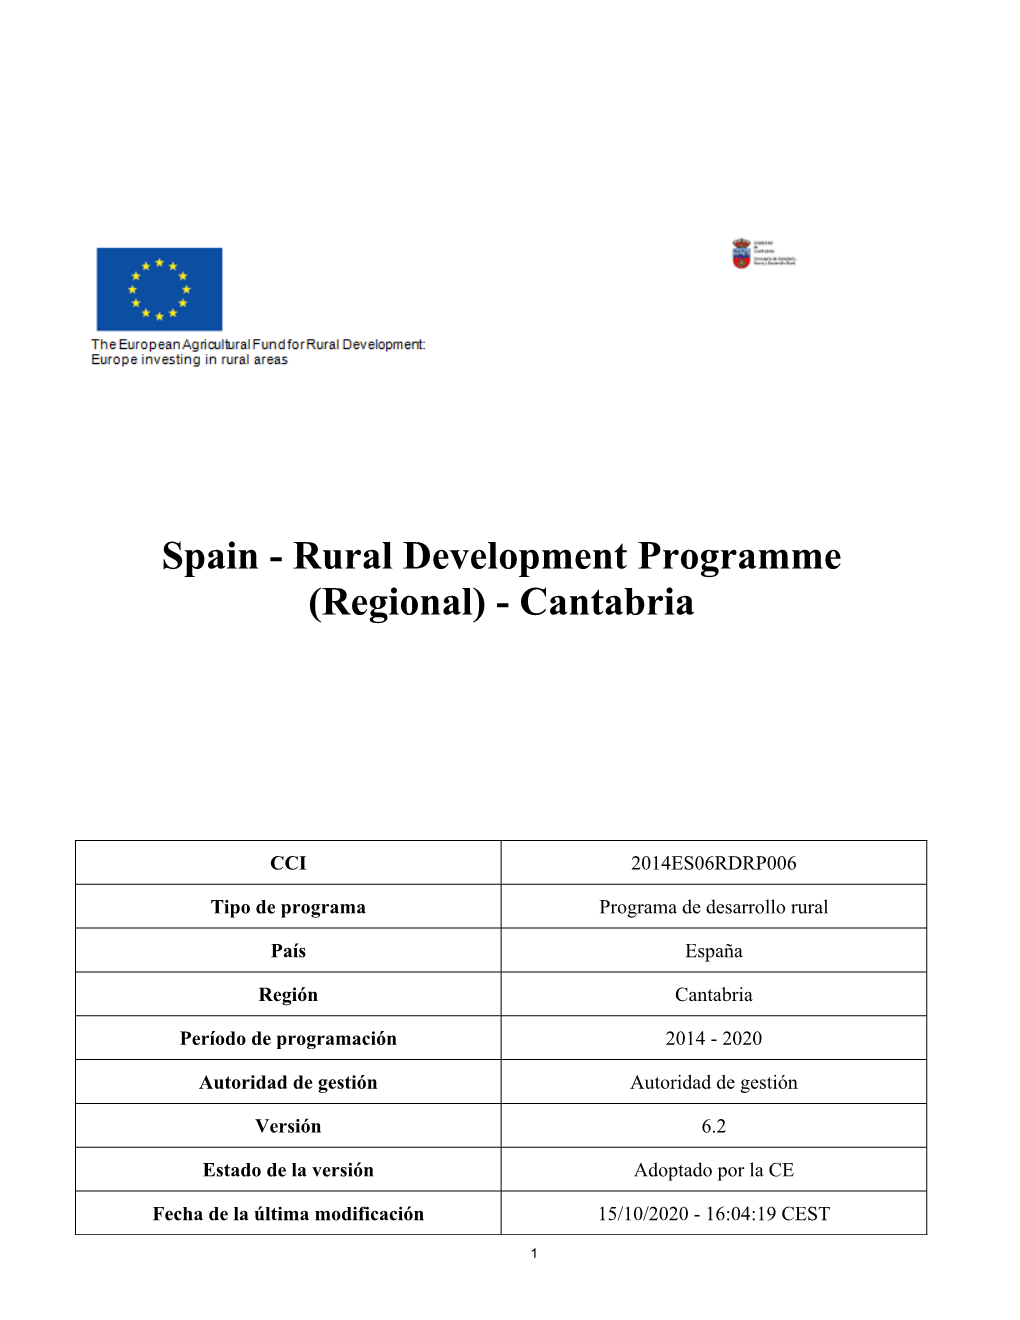 Spain - Rural Development Programme (Regional) - Cantabria